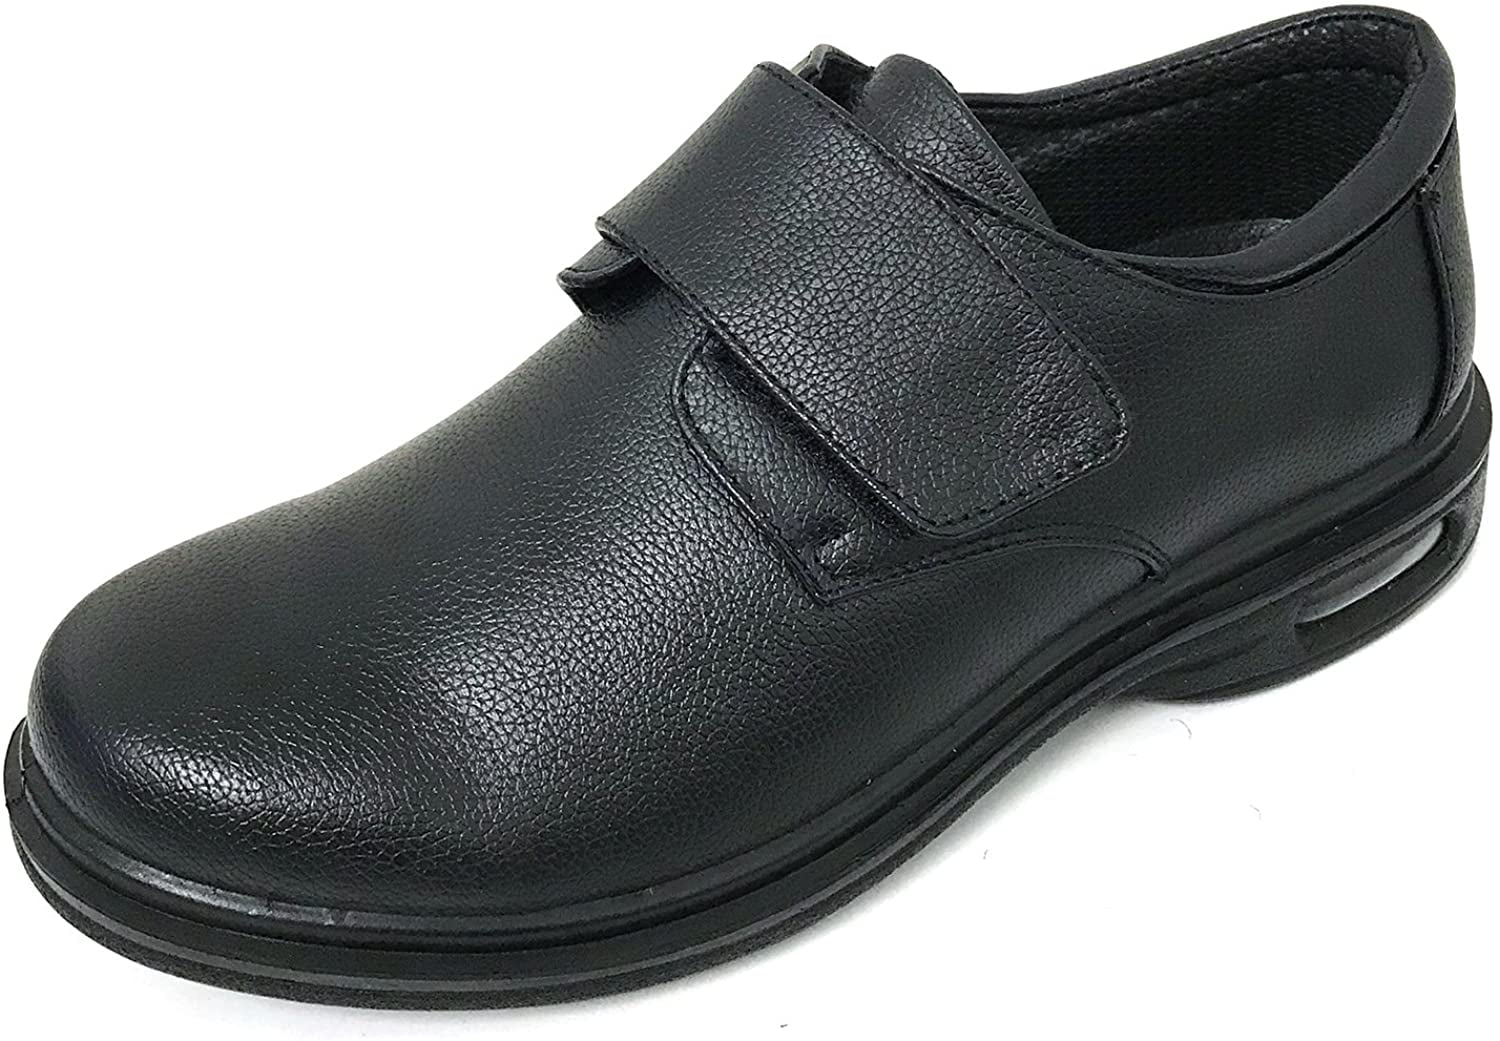 stylish slip resistant shoes mens